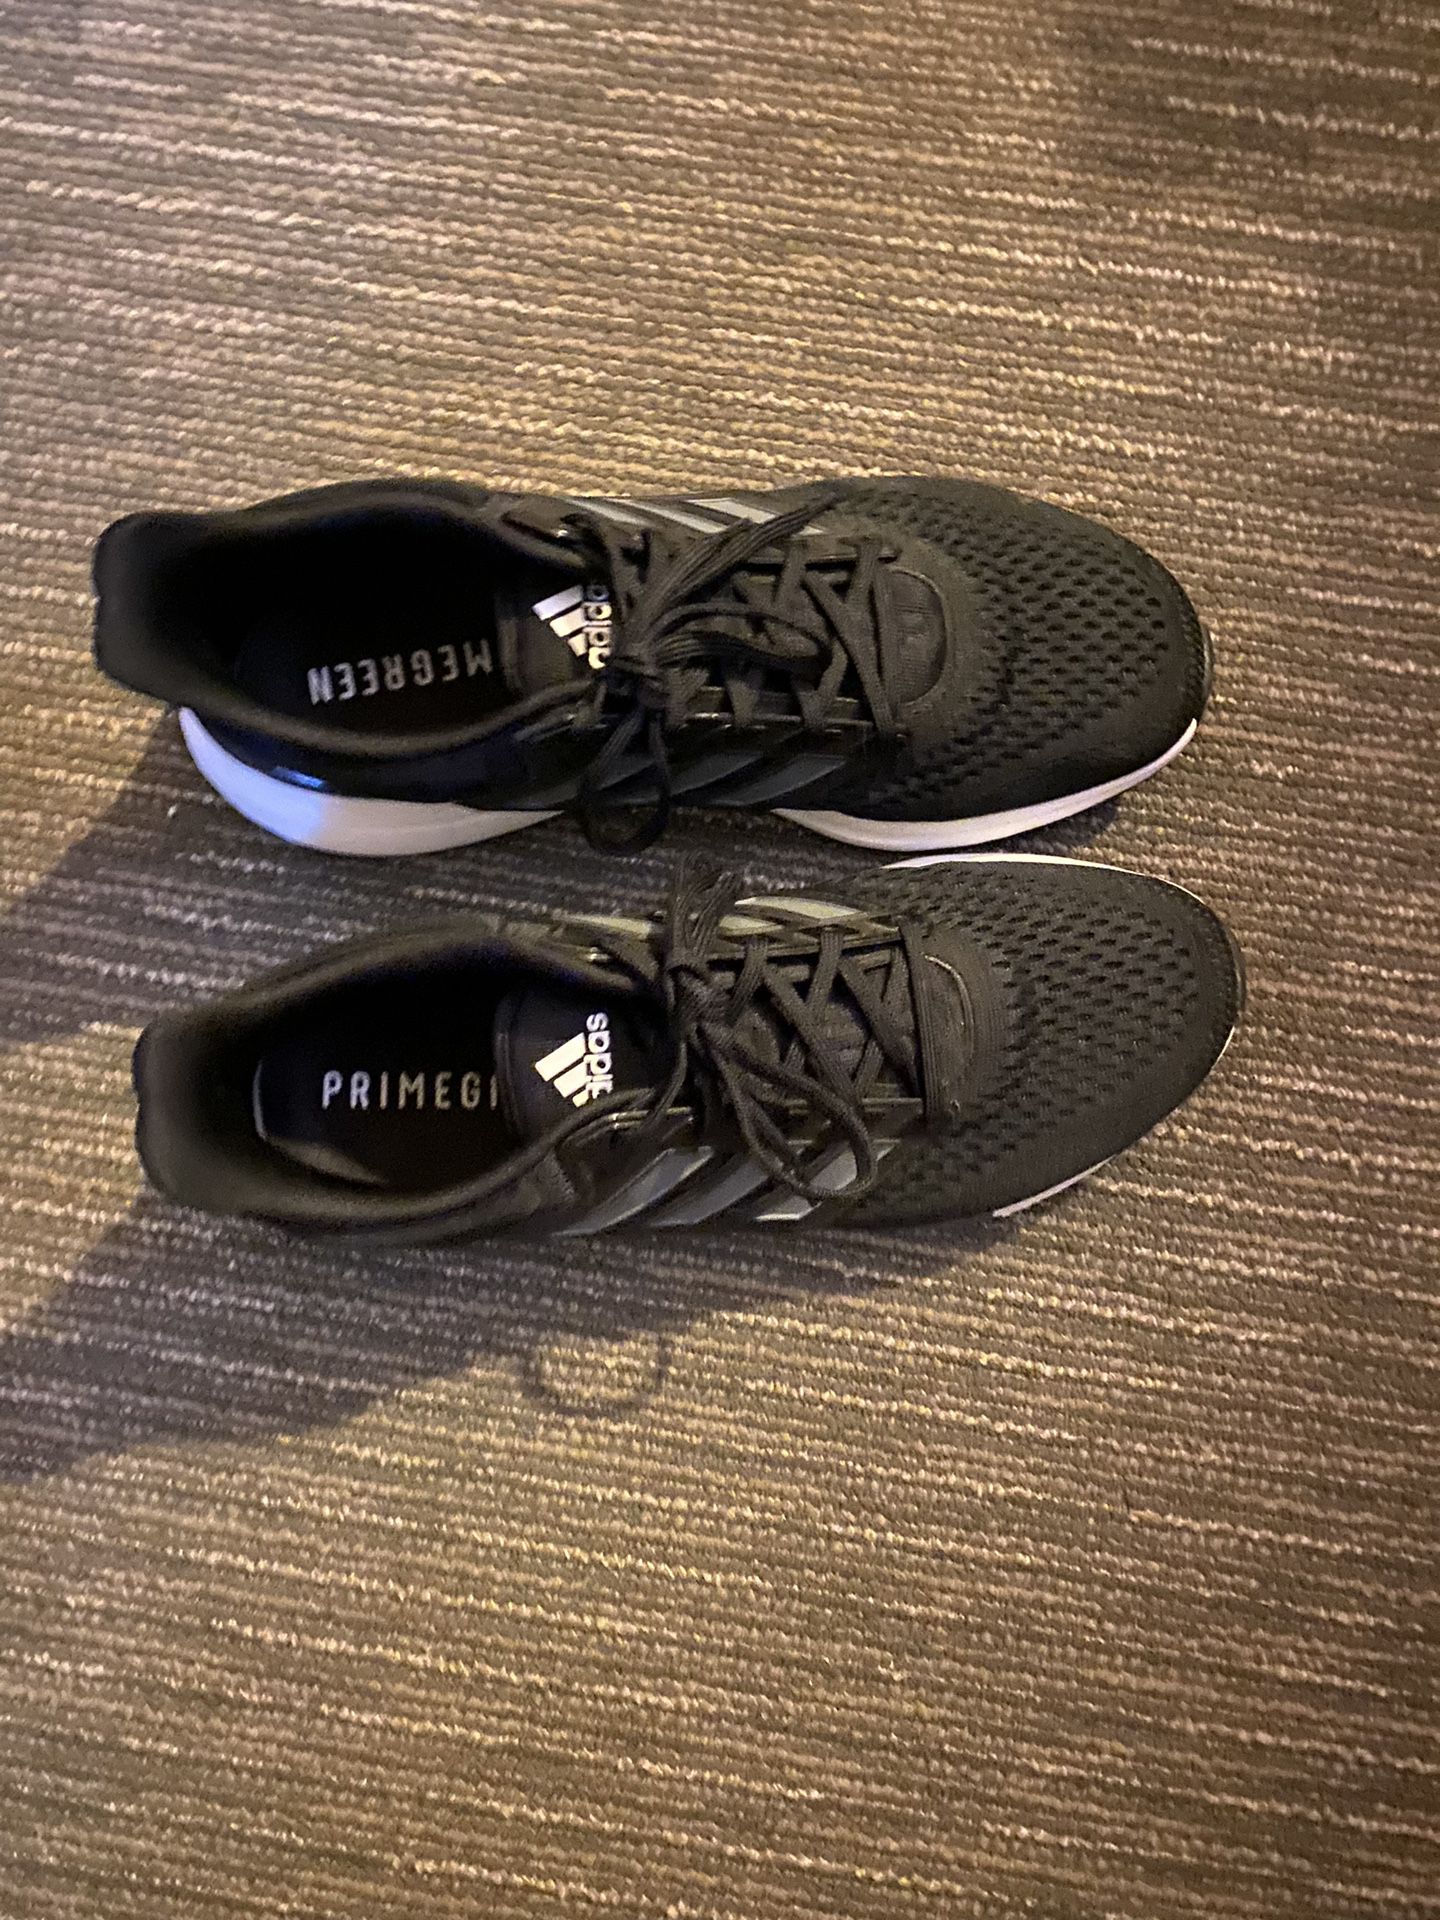 Adidas Running Shoes Men Size 12